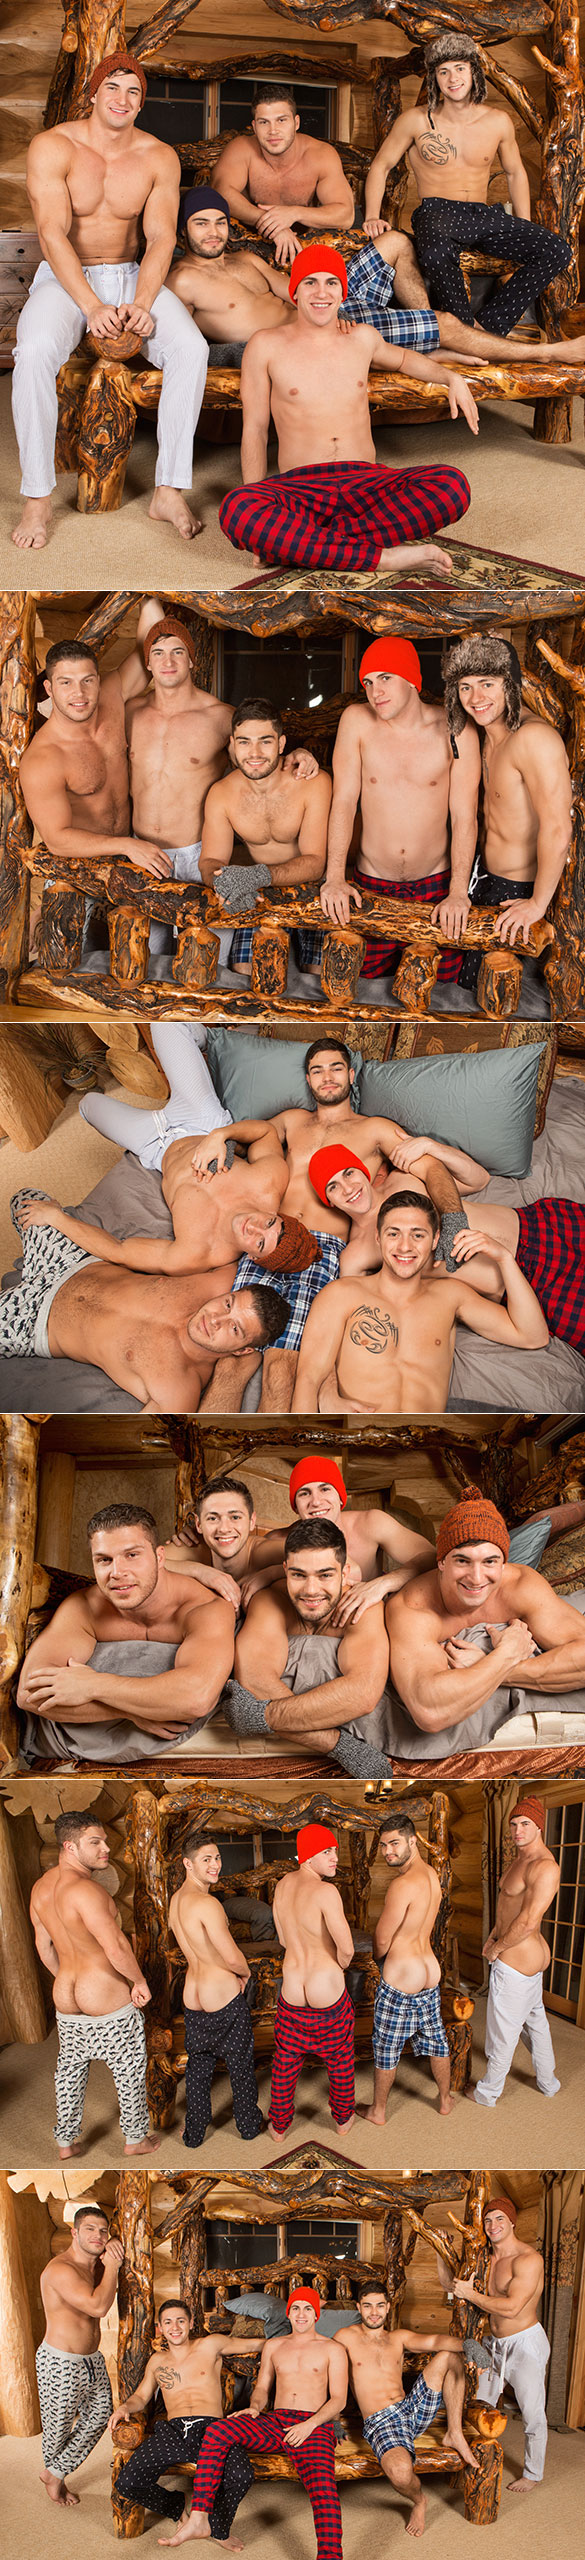 Sean Cody: "Winter Getaway: Day 1" with Brodie, Joey, Lane, Rowan and Tanner